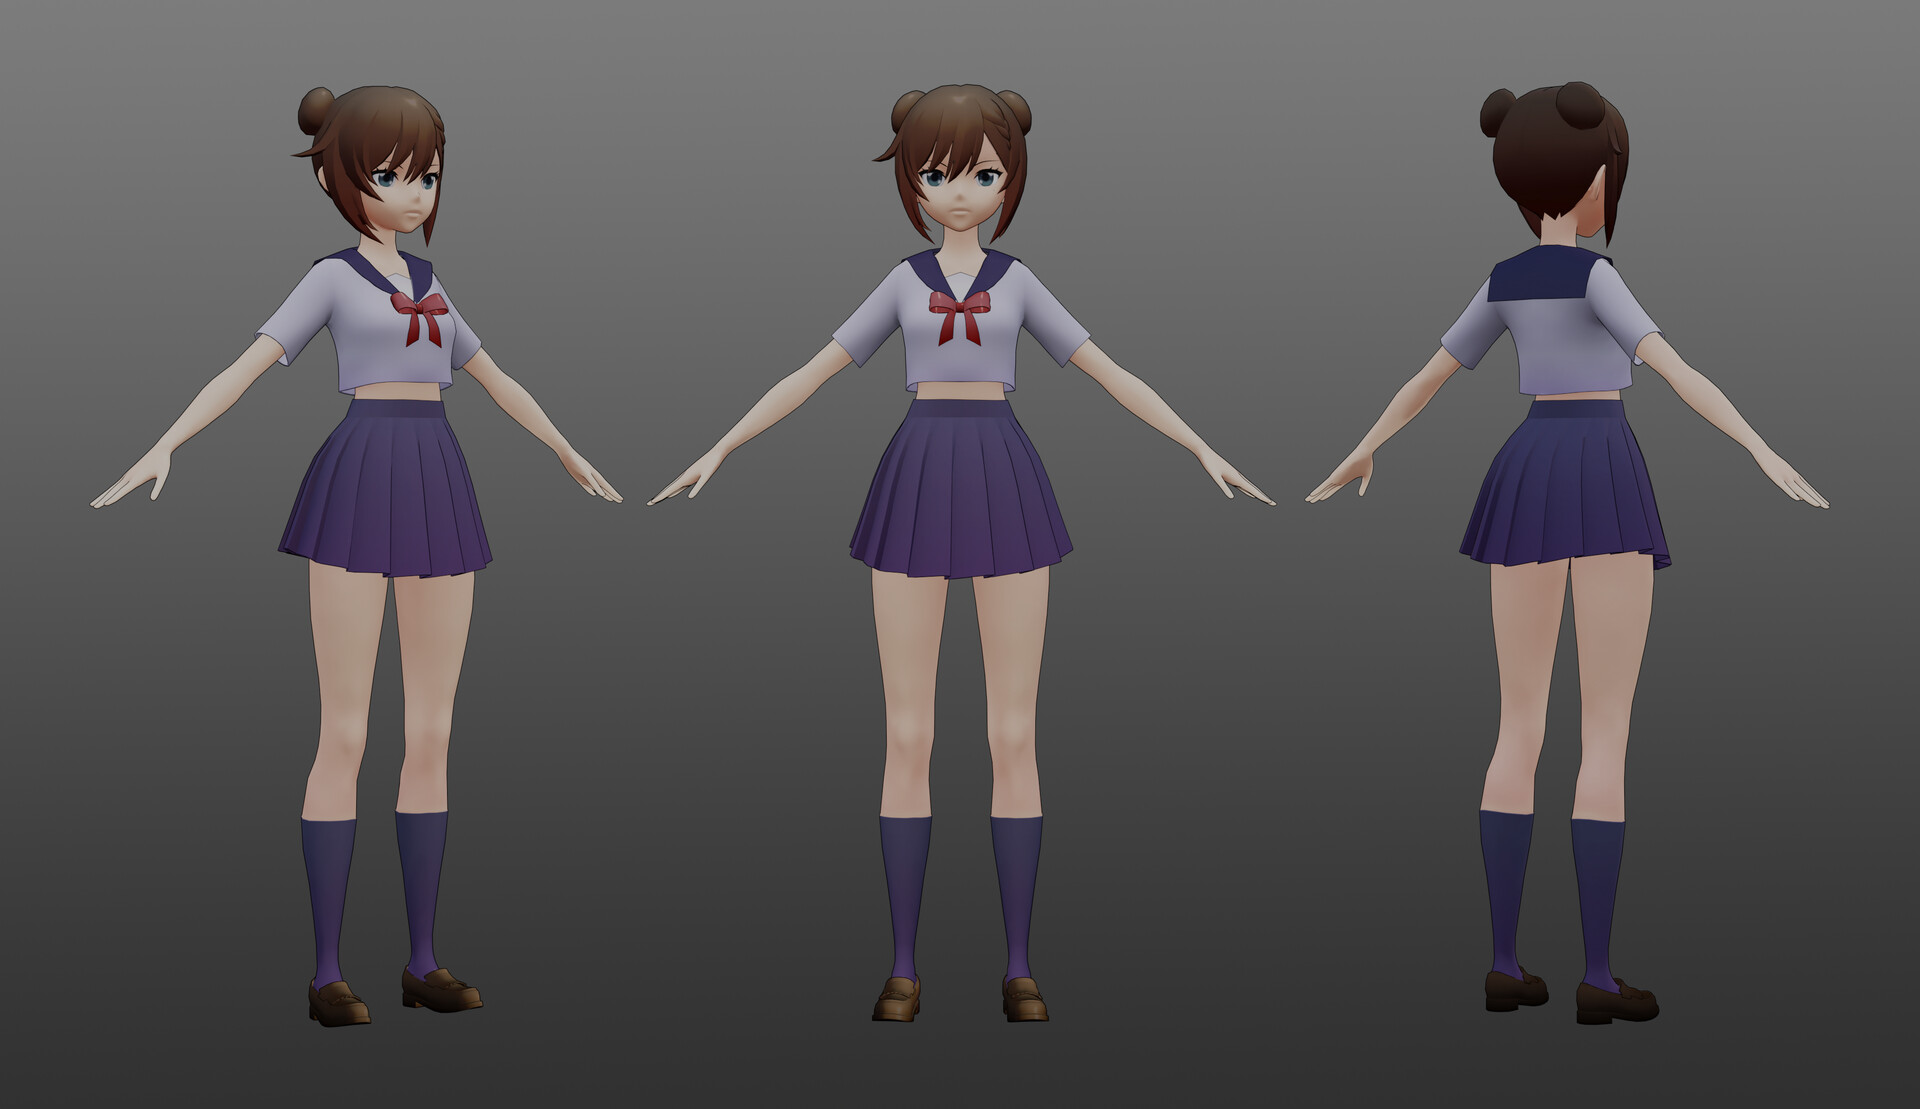 ArtStation - 3D Anime school character generator